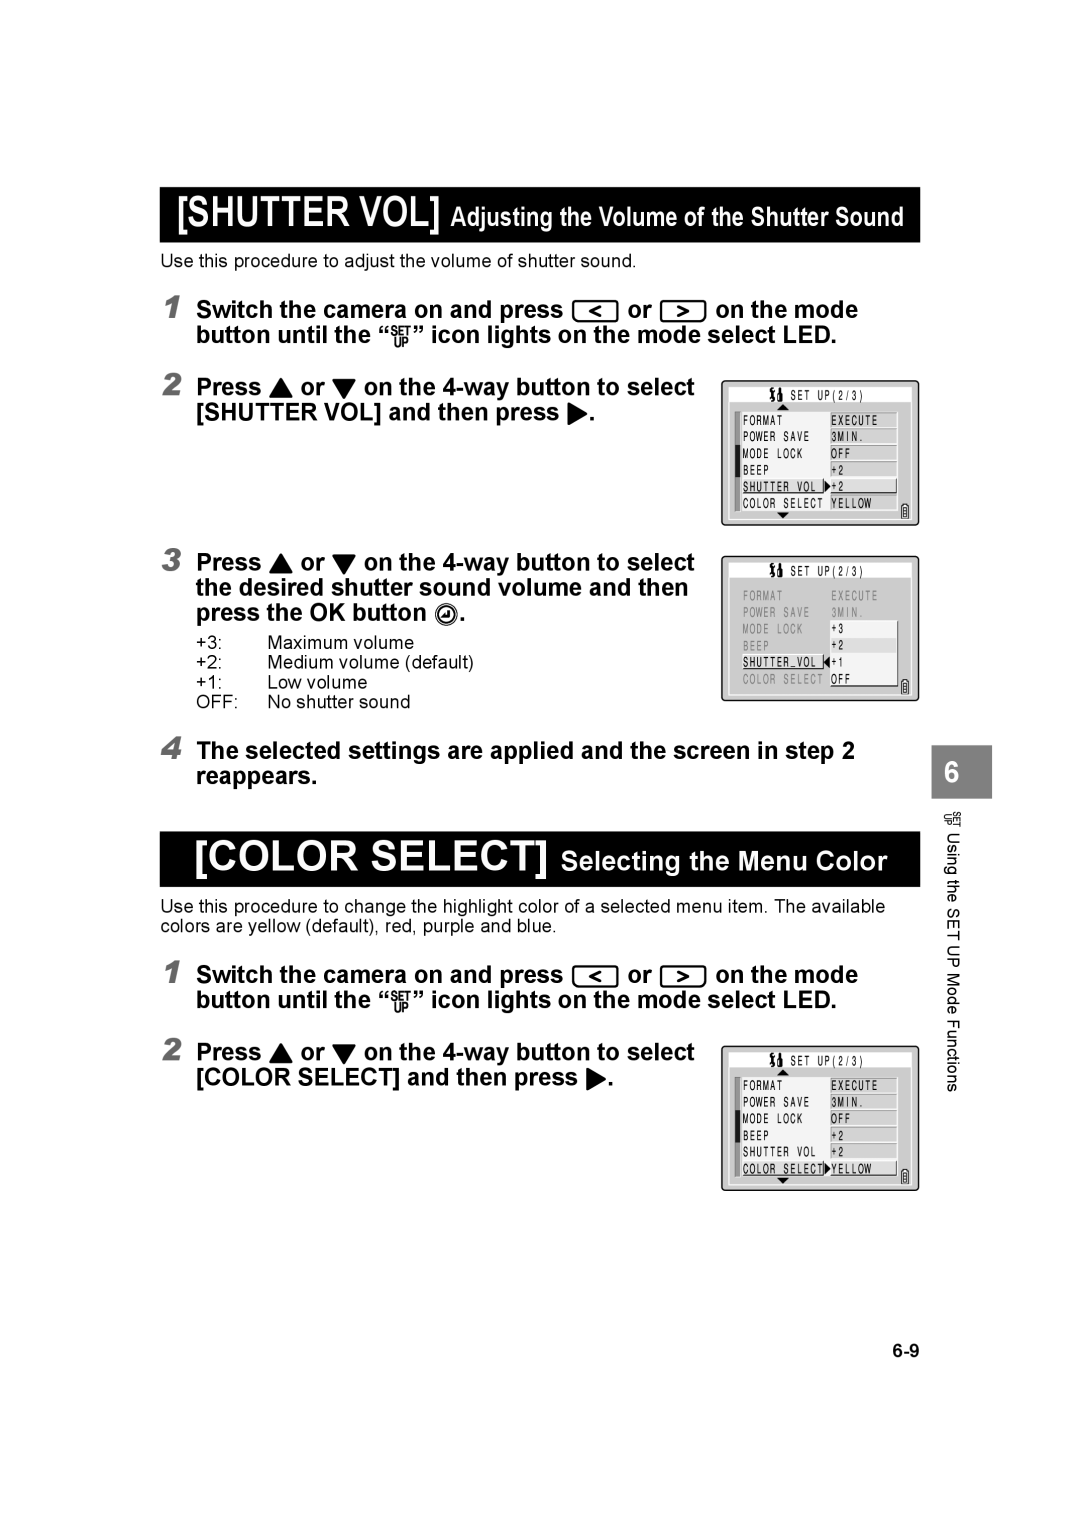 Kyocera SL300R manual Color Select Selecting the Menu Color 